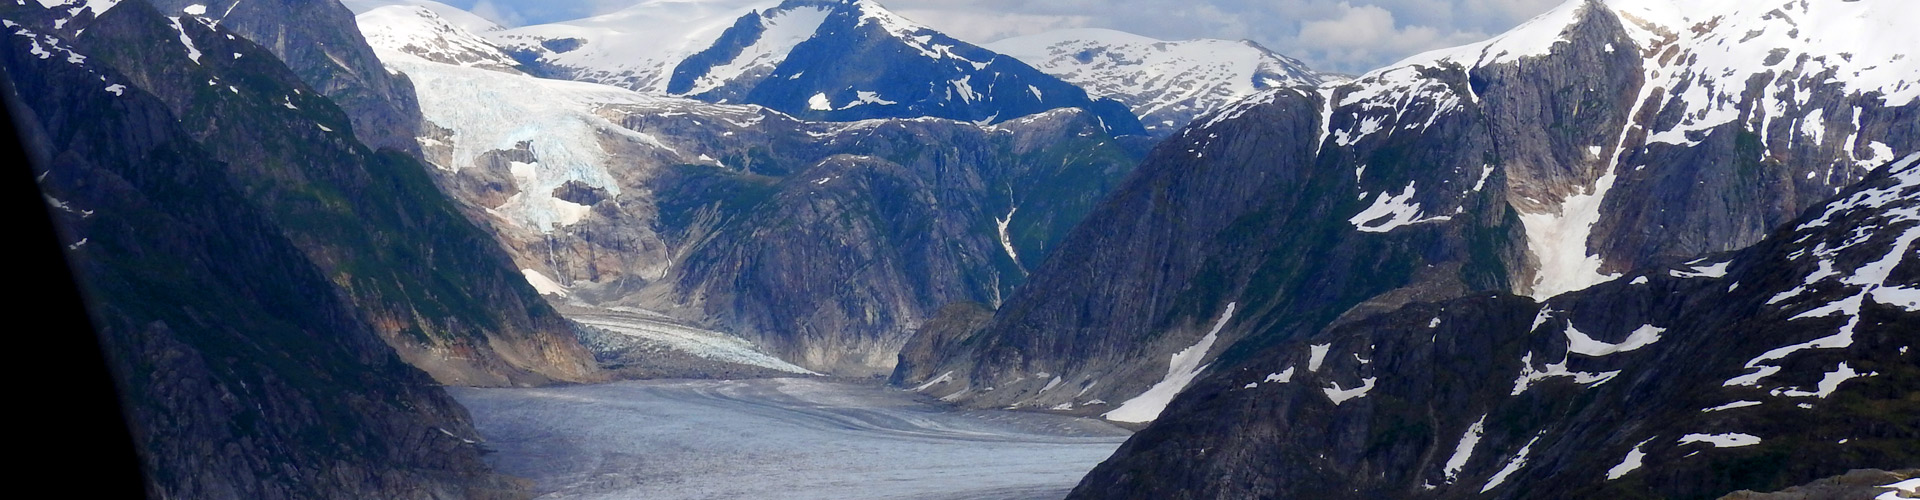 Alaska LeConte Glacier Icefield from Floatplane